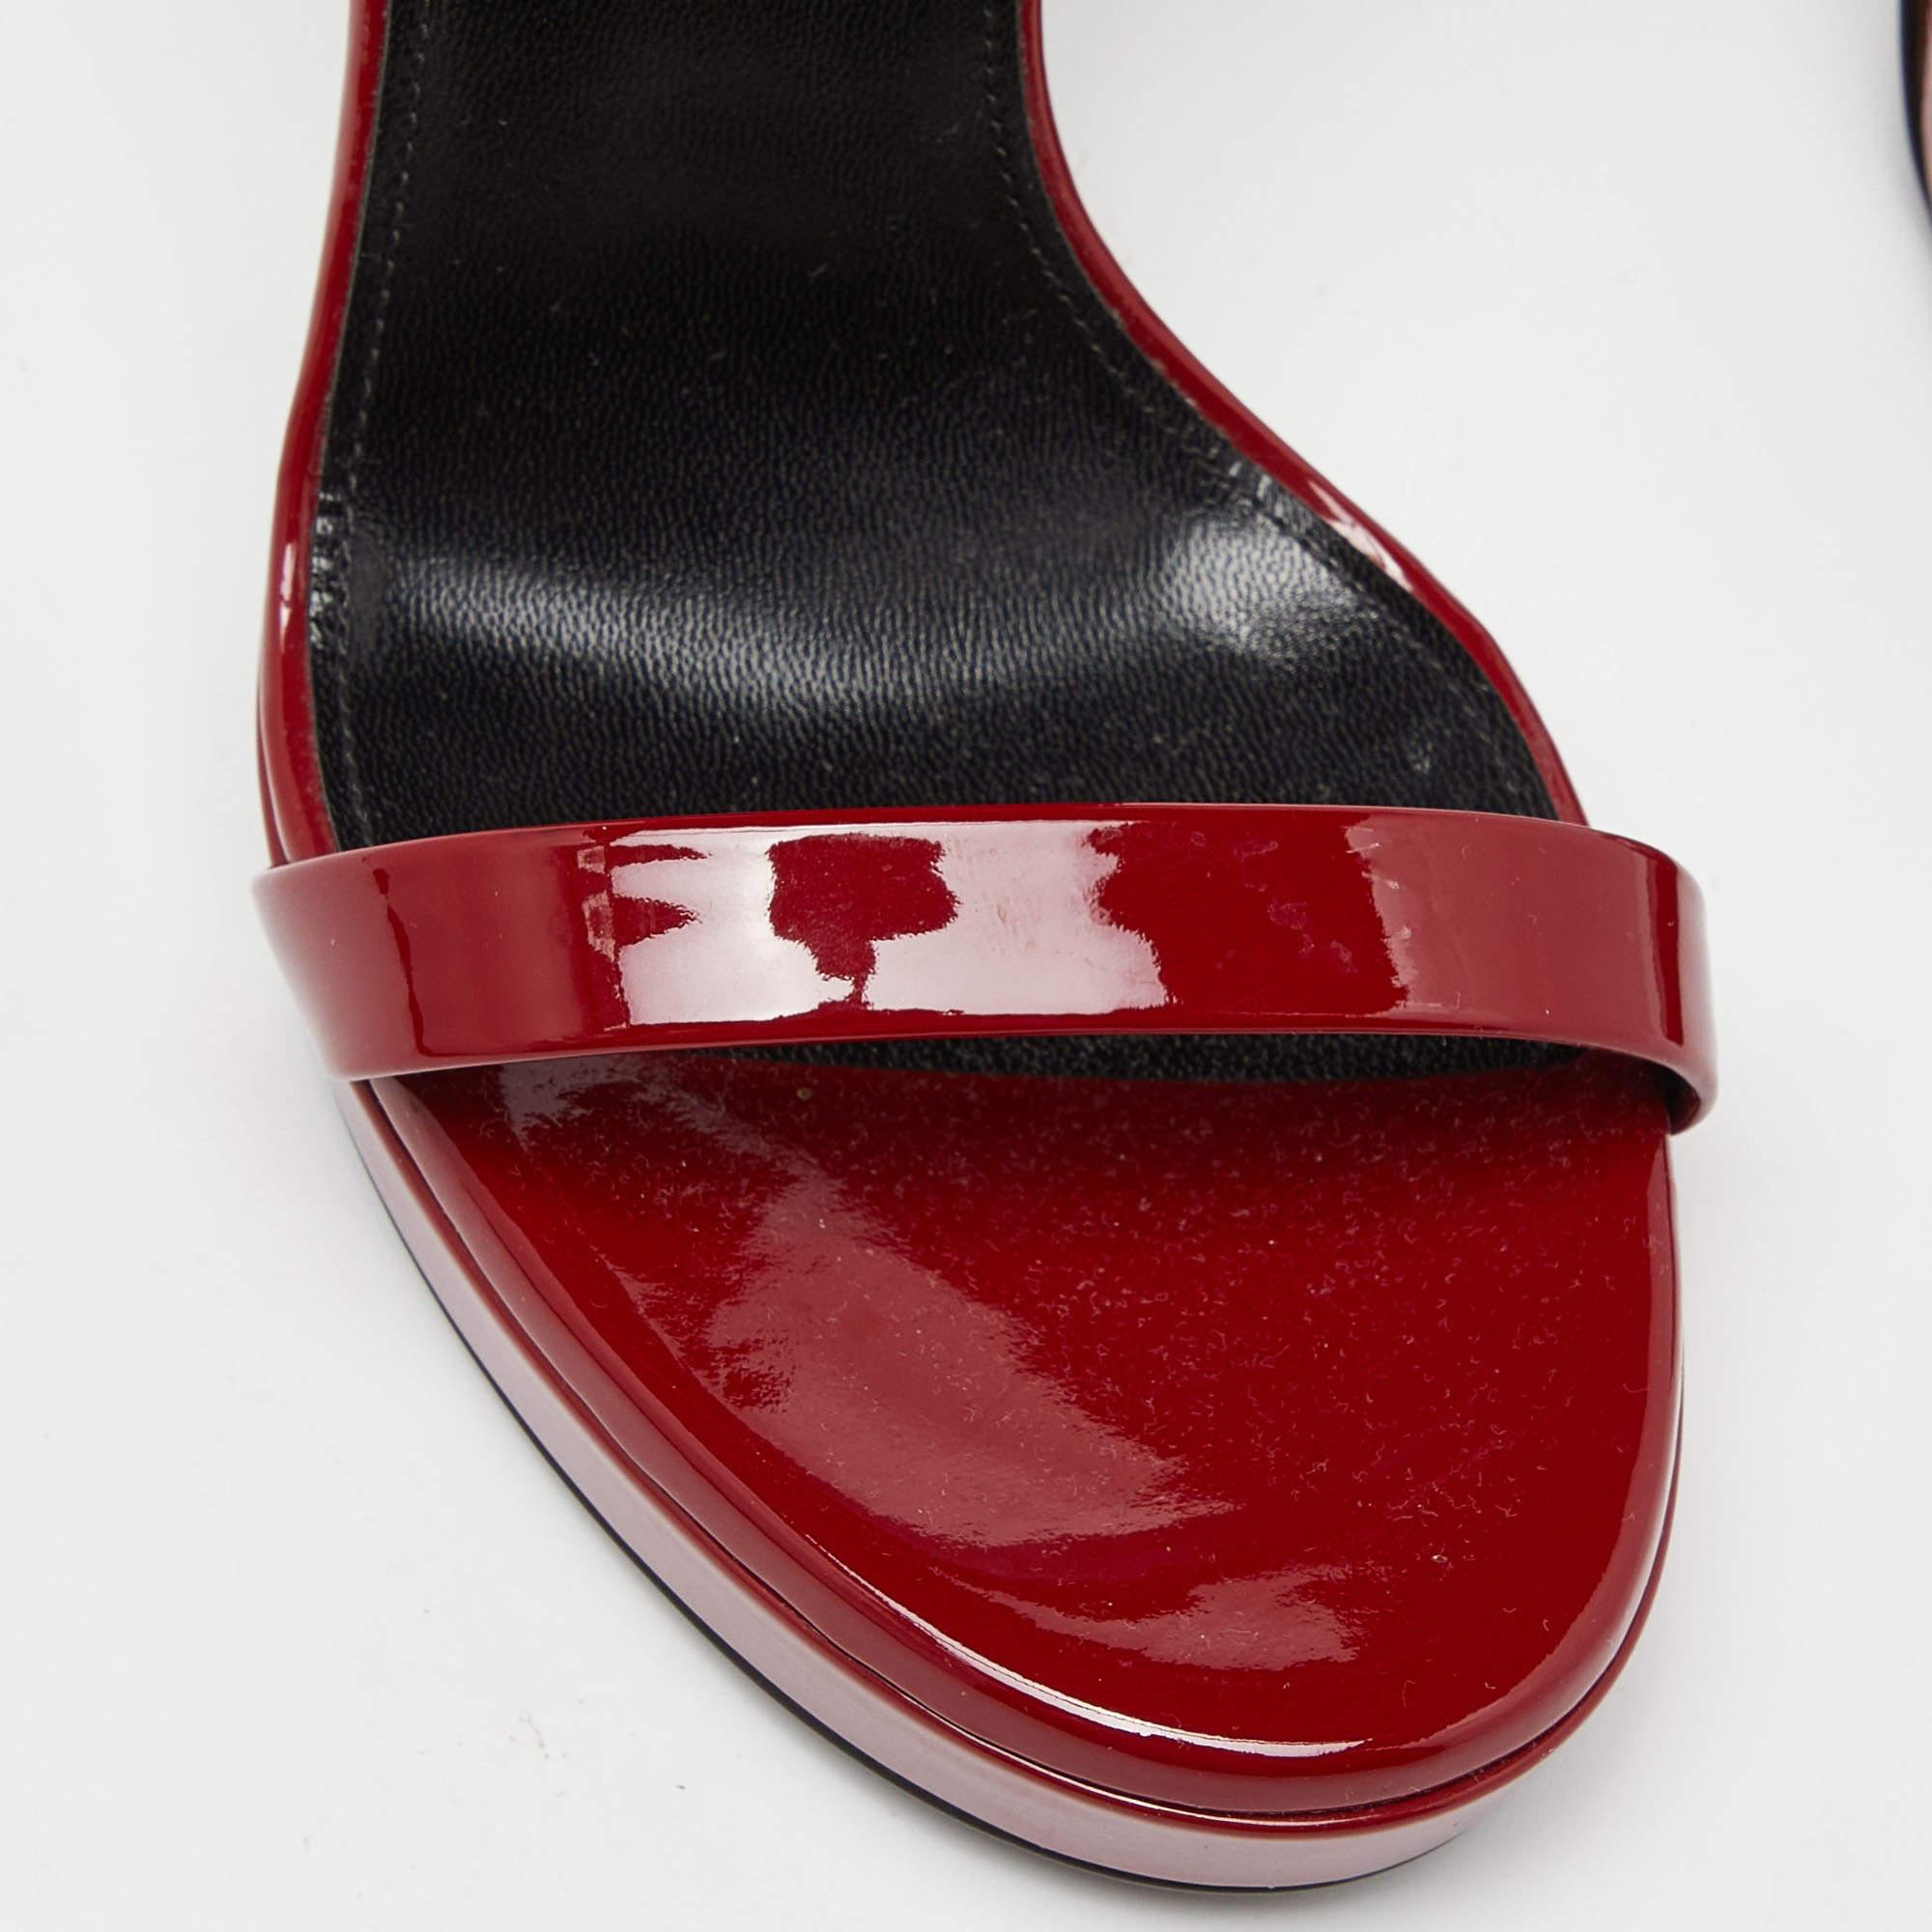 Saint Laurent Red Patent Leather Ankle Strap Sandals Size 36 4